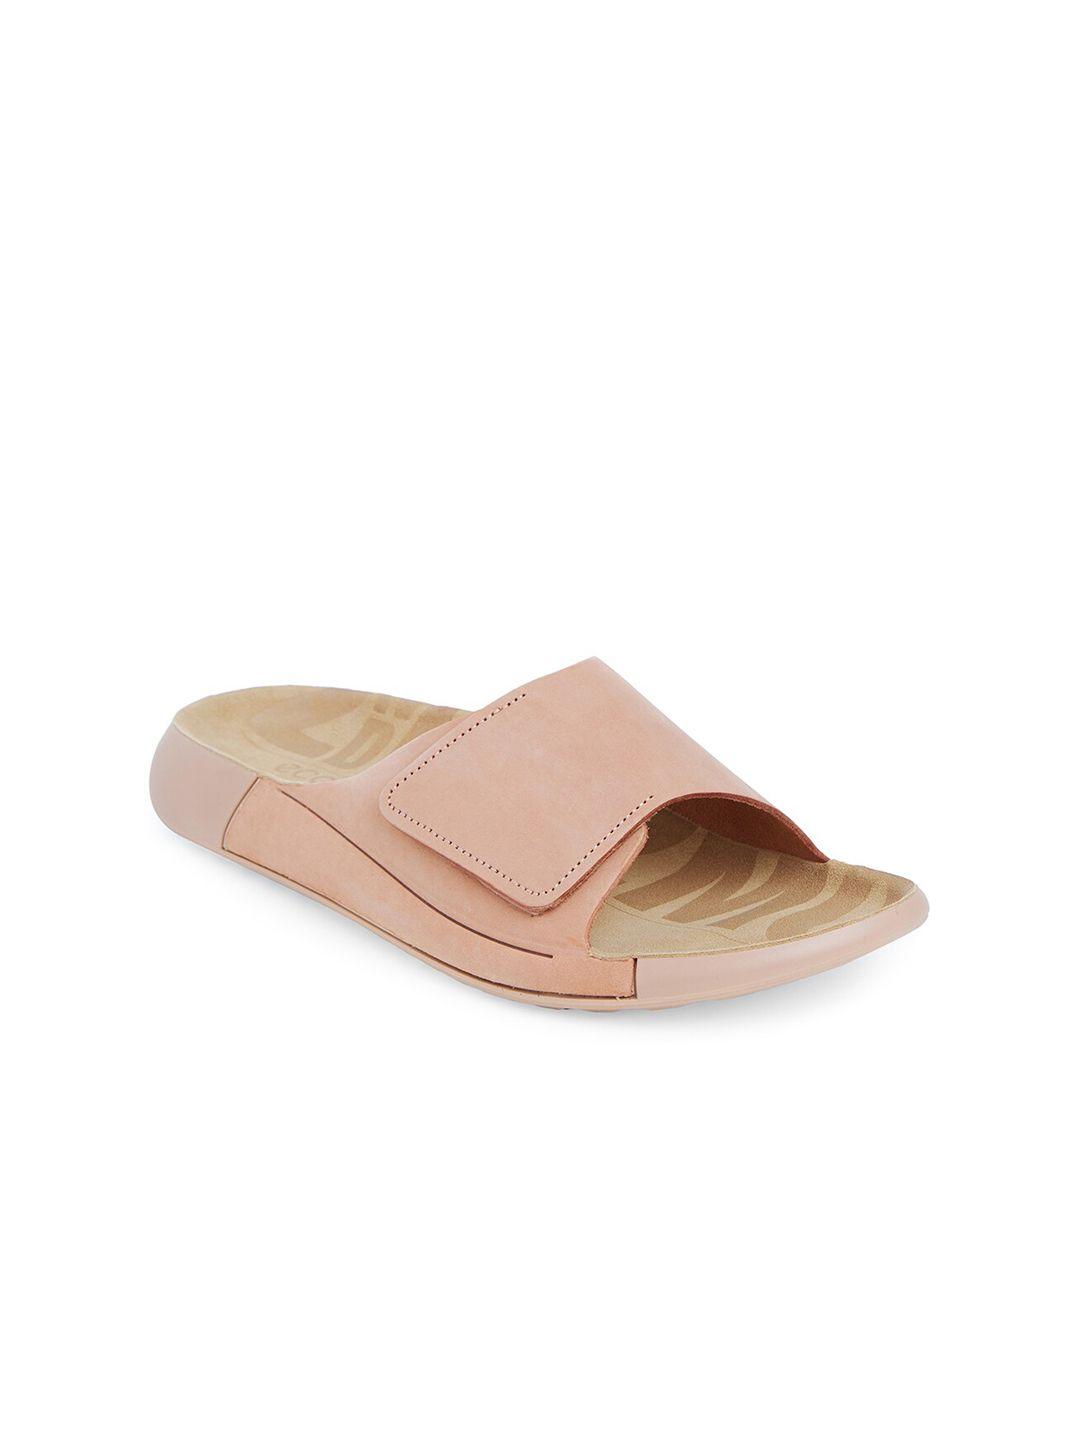 ecco women pink scandinavian spirit solid casual leather open toe flats